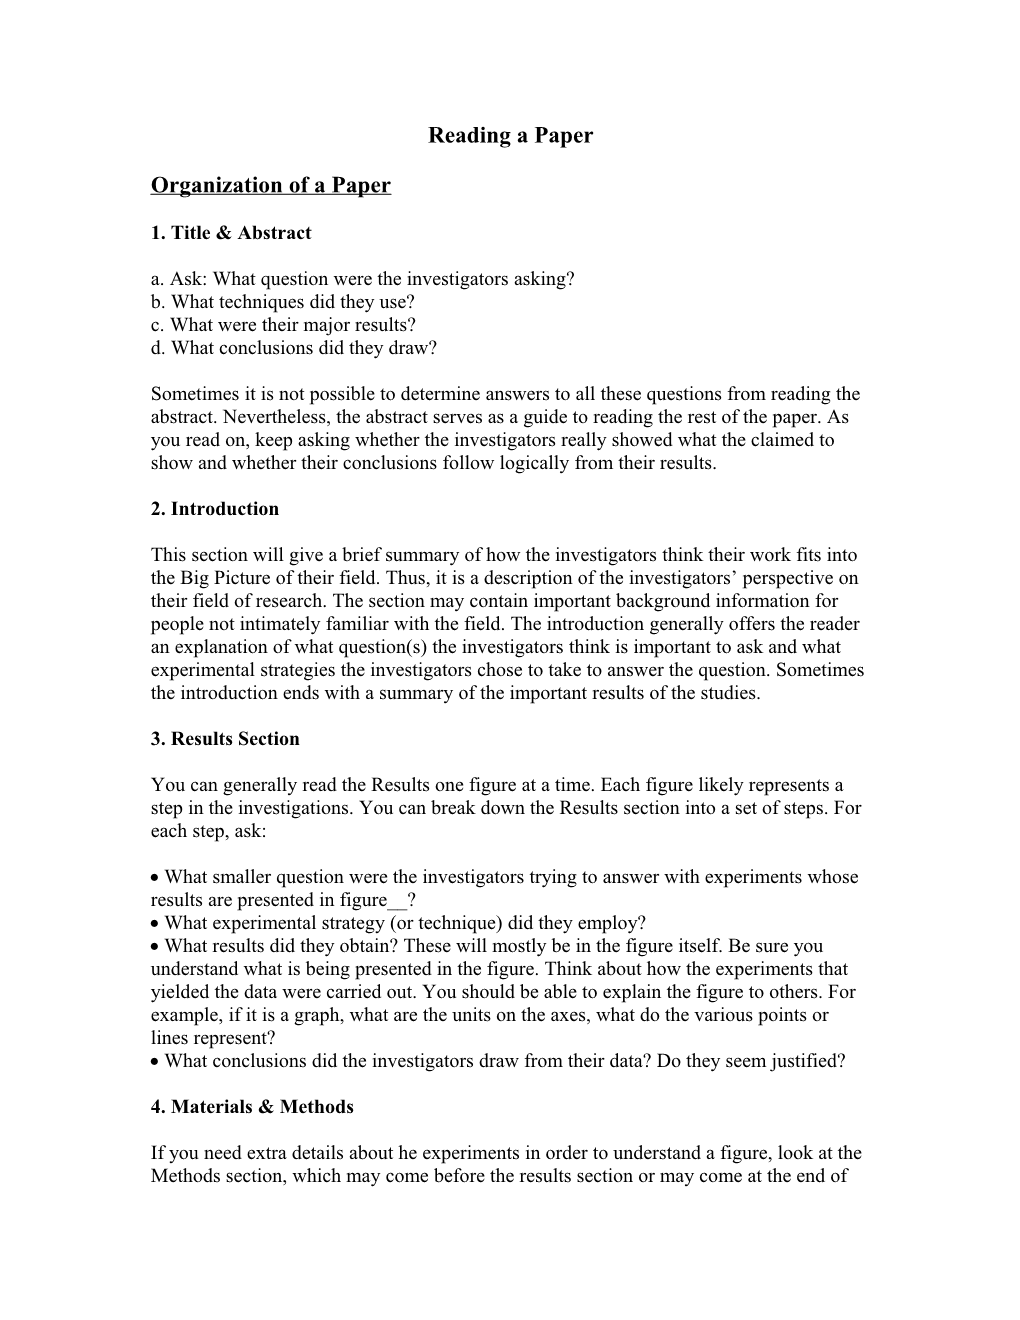 Organization of a Paper